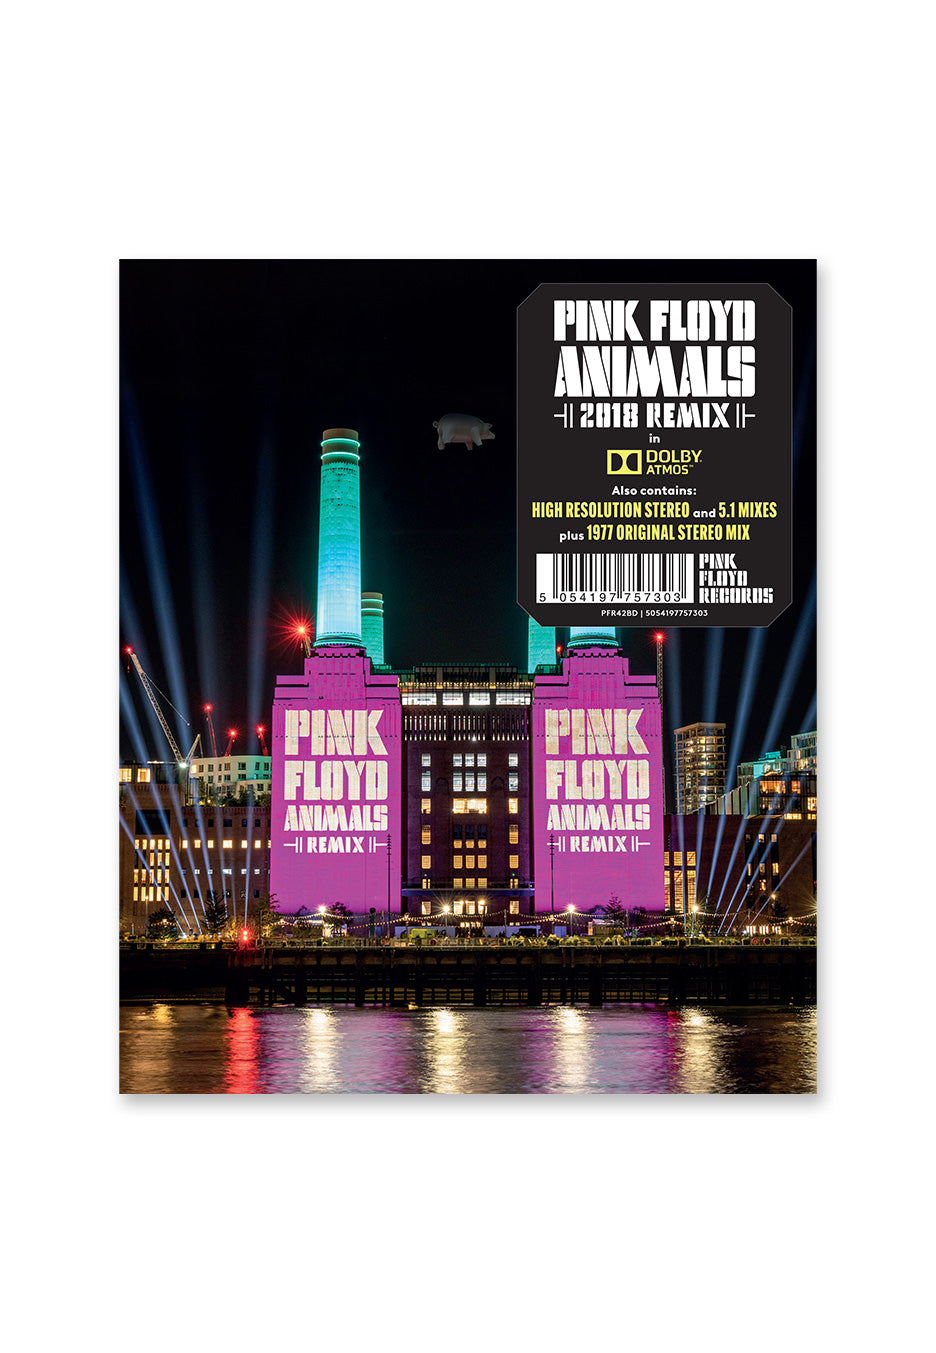 Pink Floyd - Animals 2018 Remix - Blu Ray